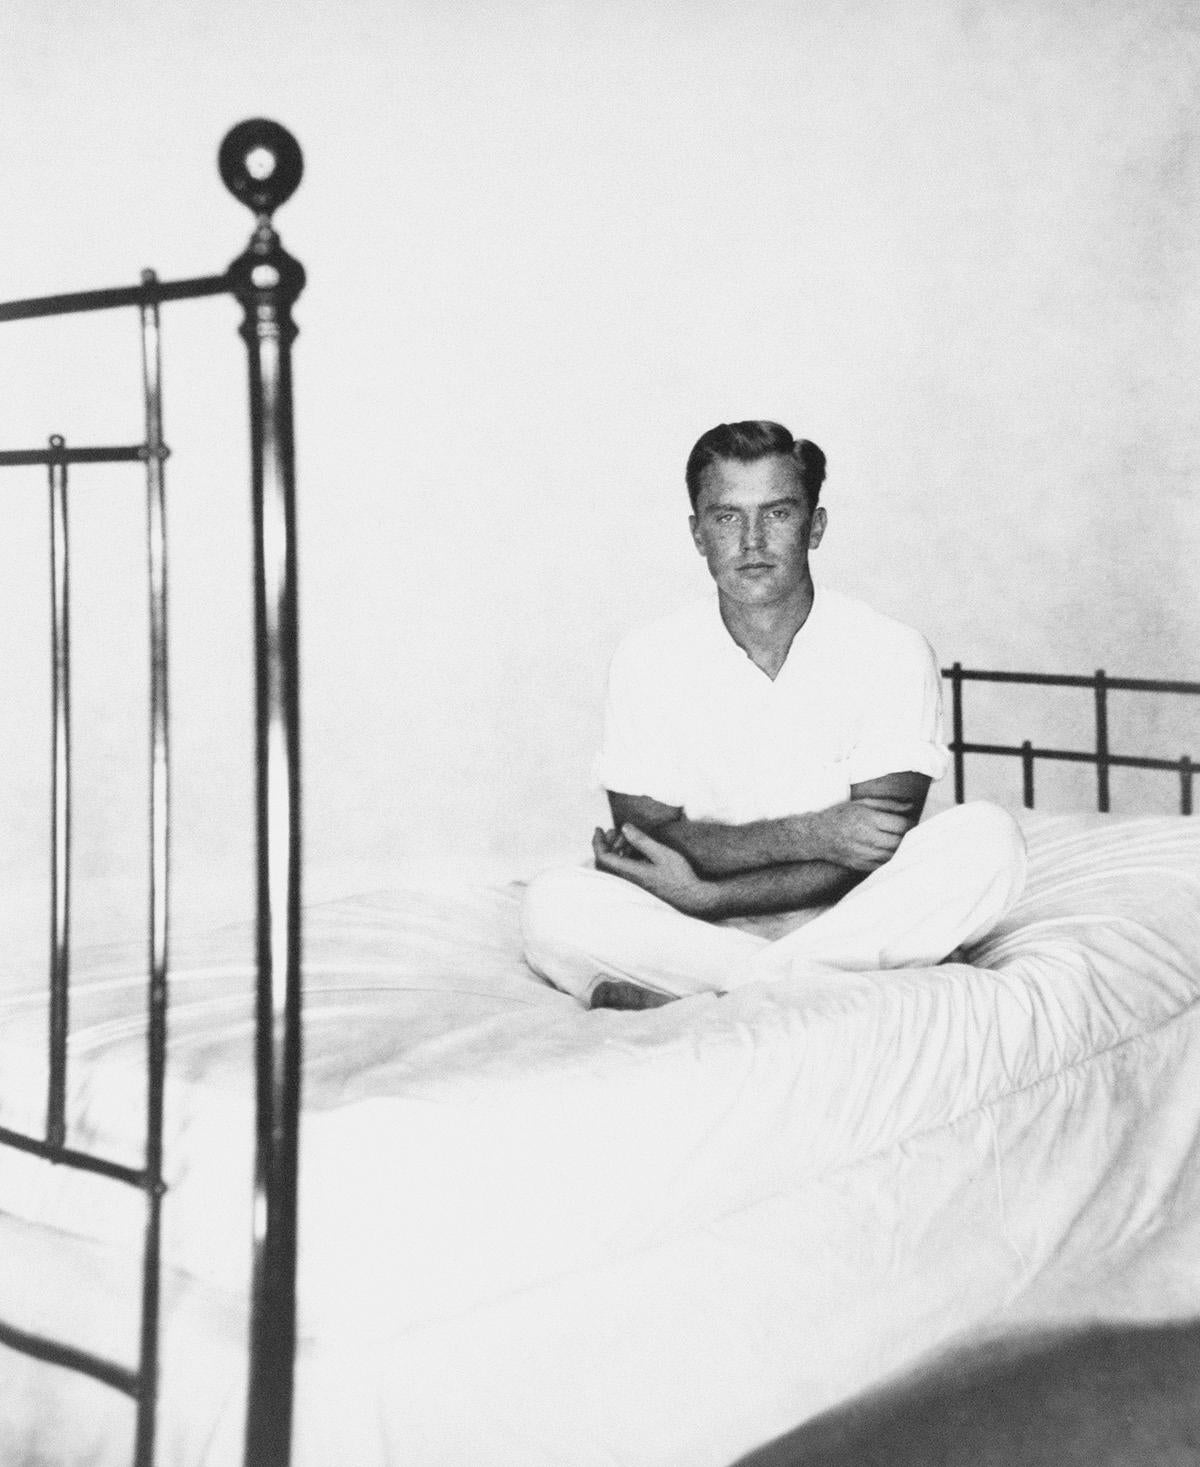 Portrait of Alexander Jensen Yow on Bed - Photograph by George Platt Lynes